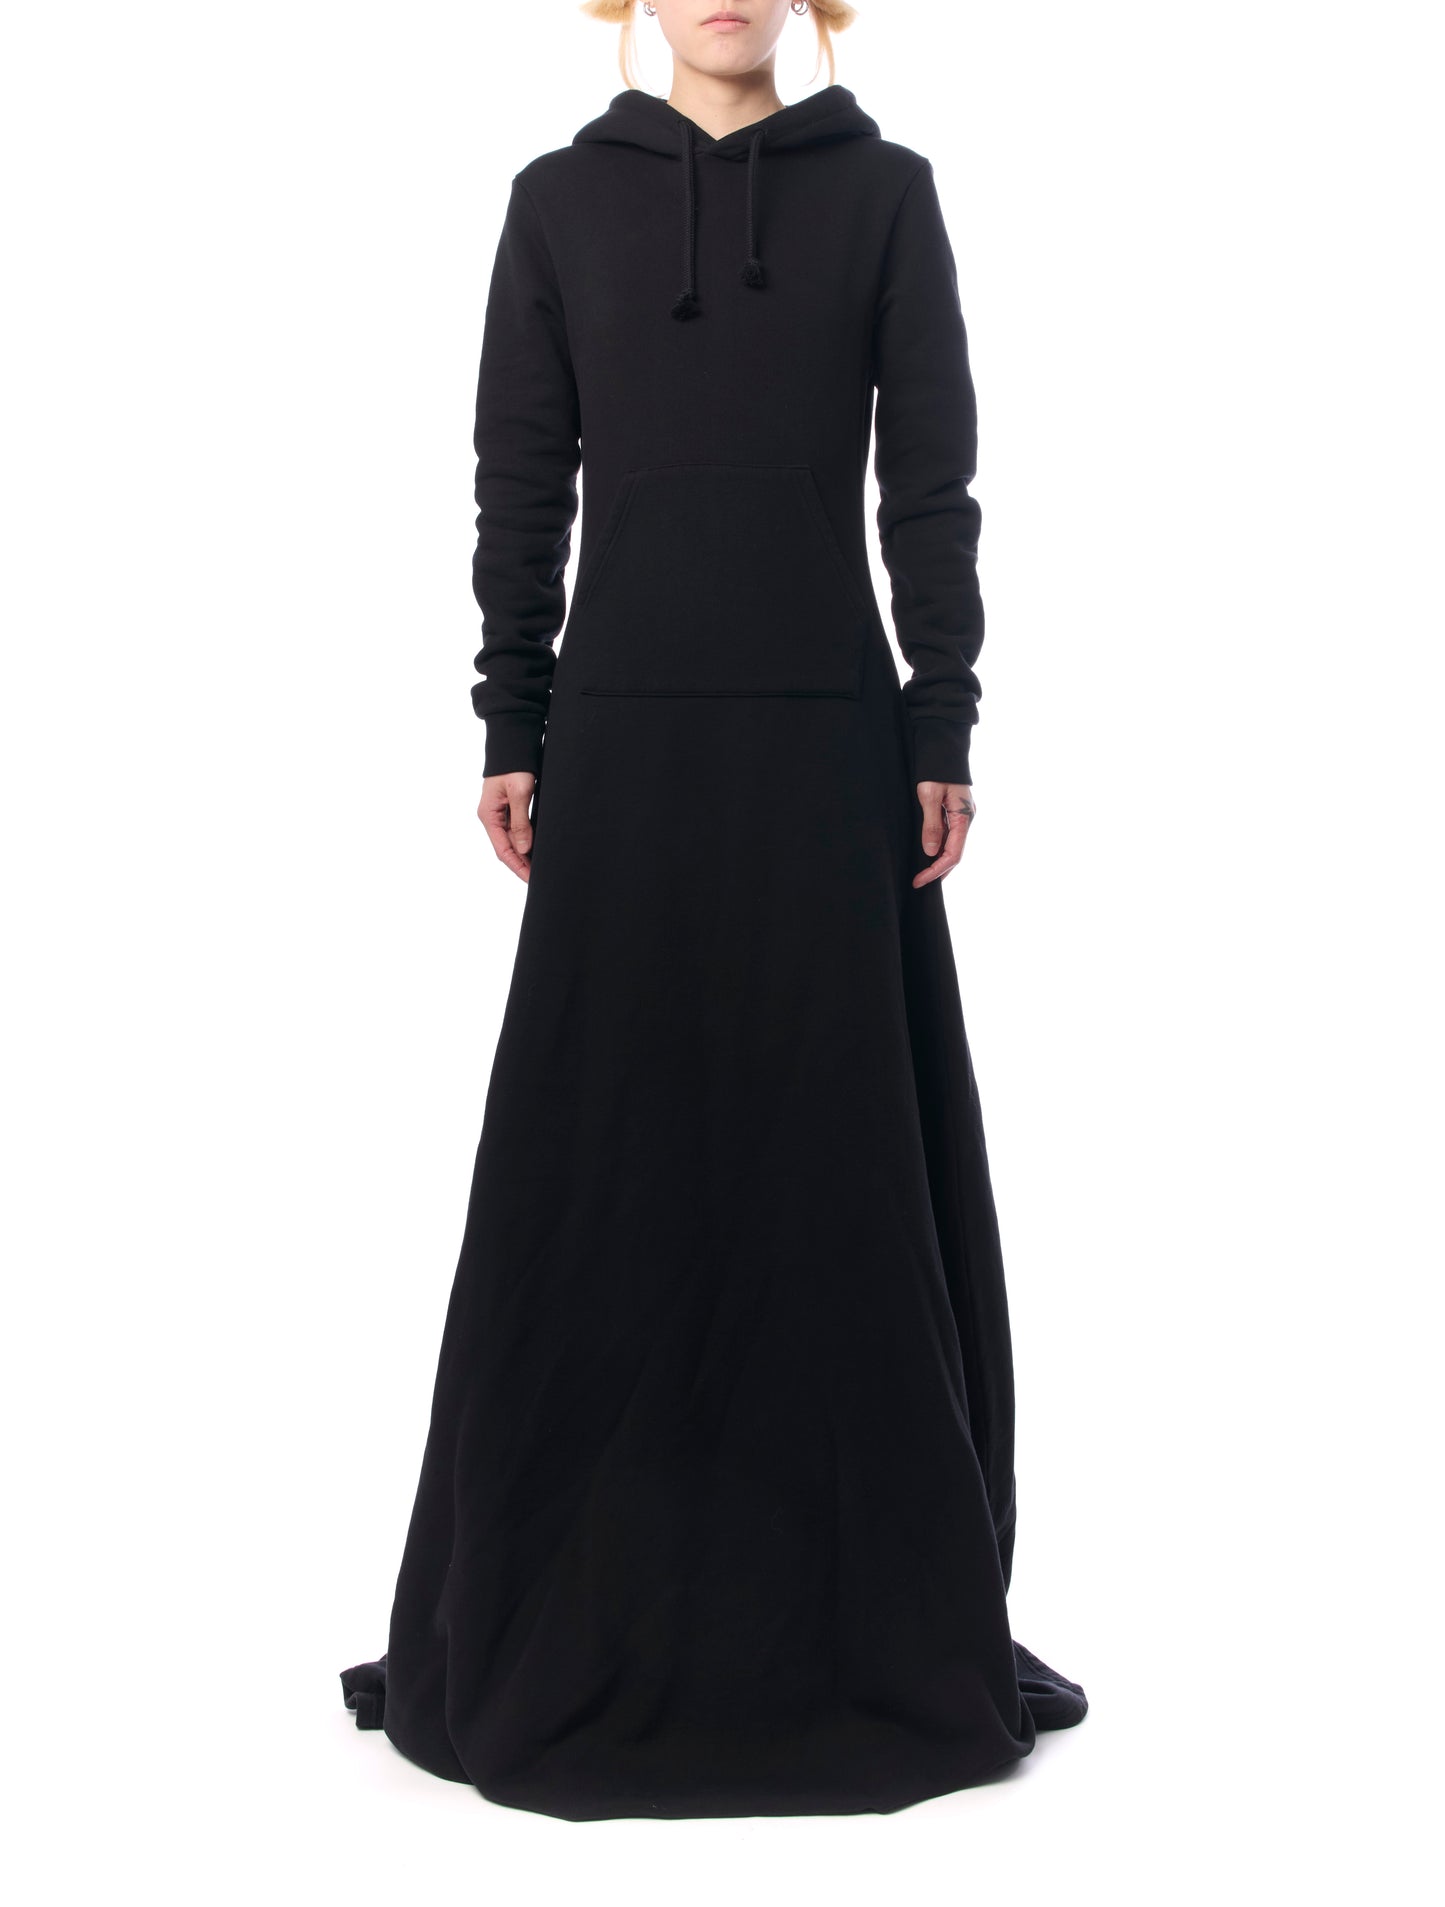 ABRA Black Pagan Hoodie Dress